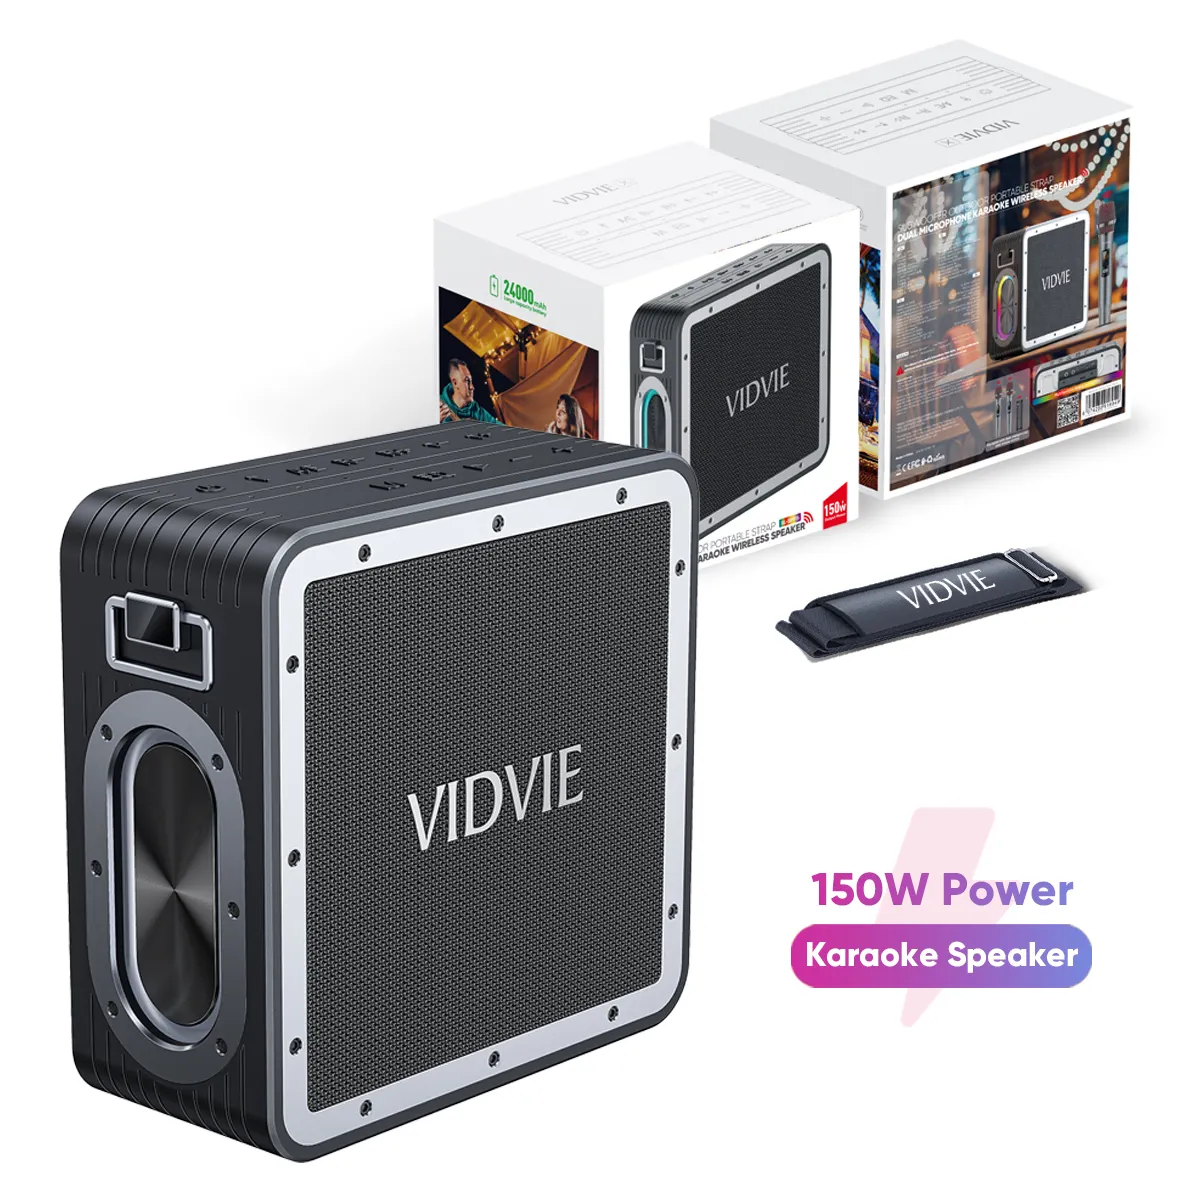 Vivie X Speaker TWS nirkabel portabel, Speaker Karaoke nirkabel pesta 150W Bass berat dengan mikrofon dan Bluetooth